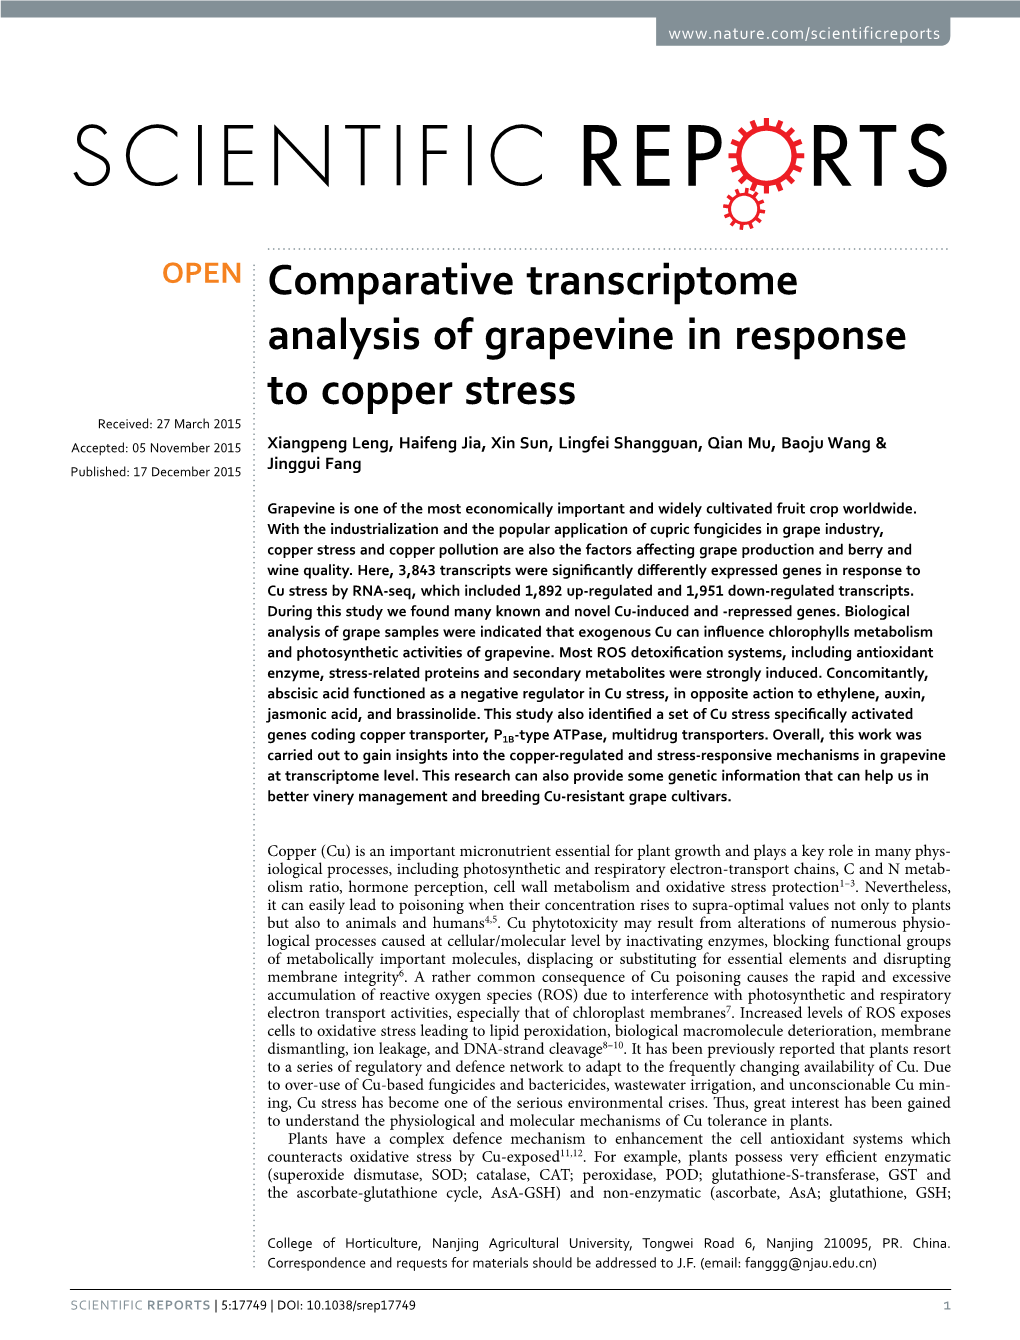 Comparative Transcriptome Analysis of Grapevine in Response to Copper